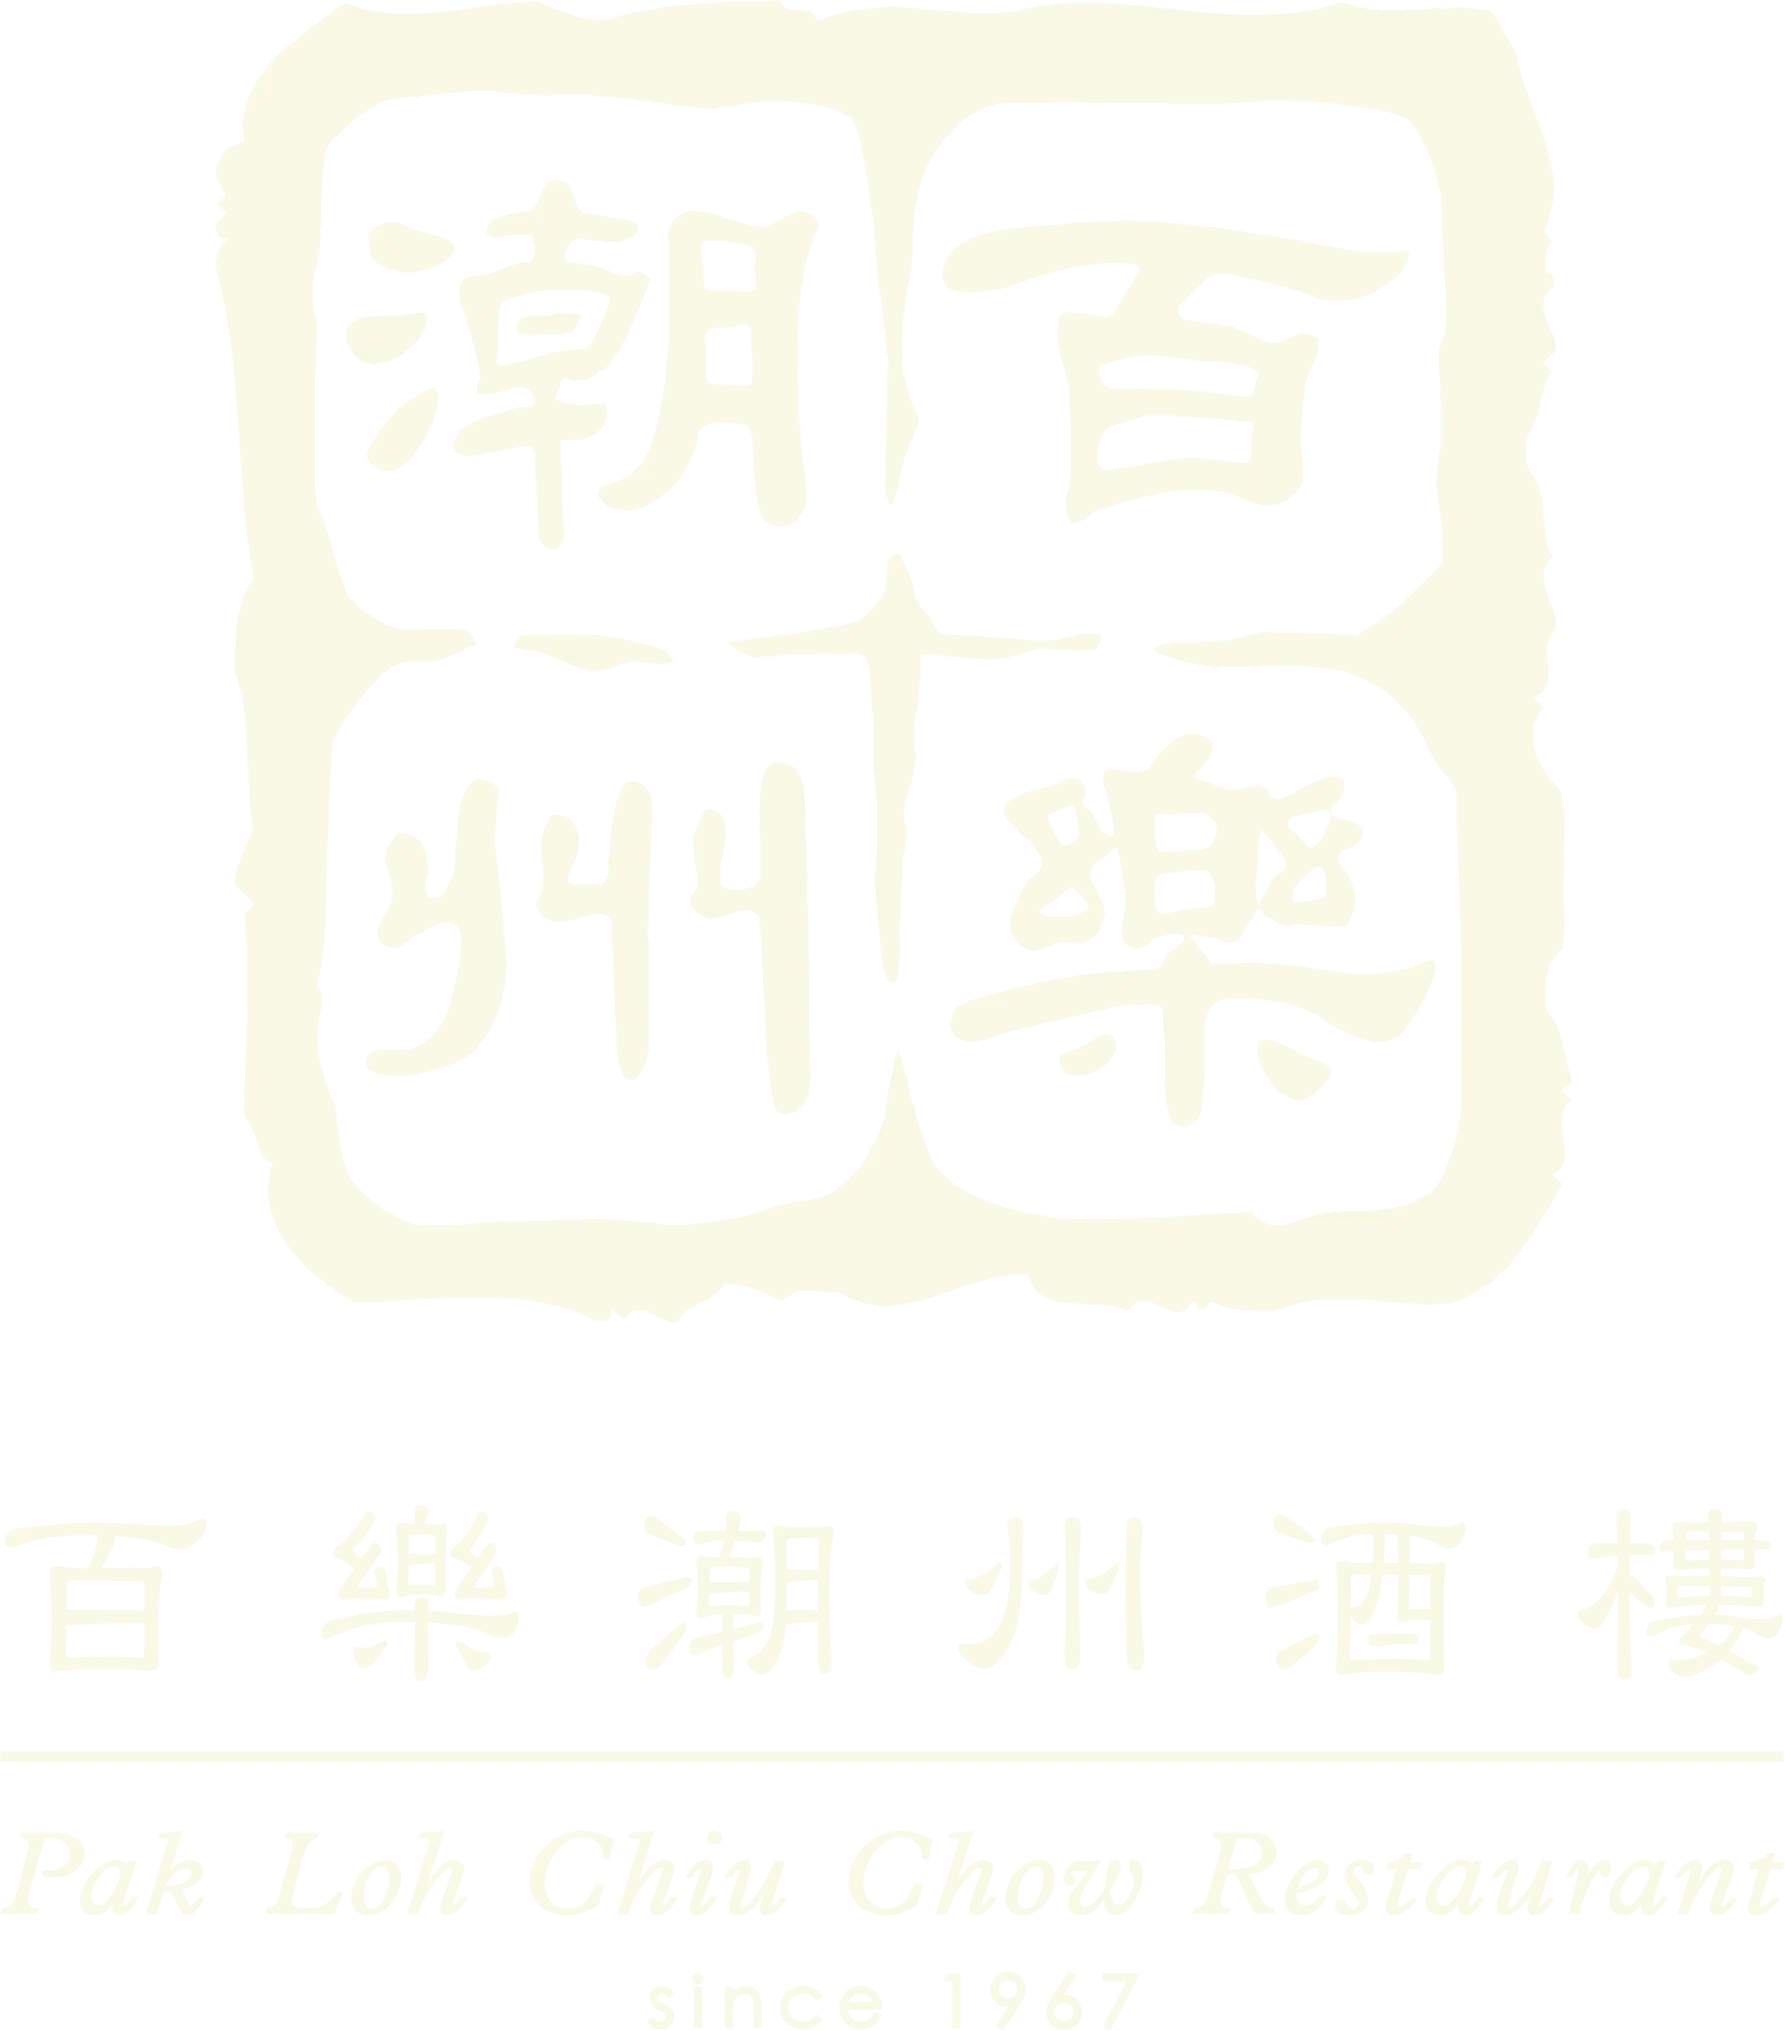 Pak Loh Chiu Chow Restaurant